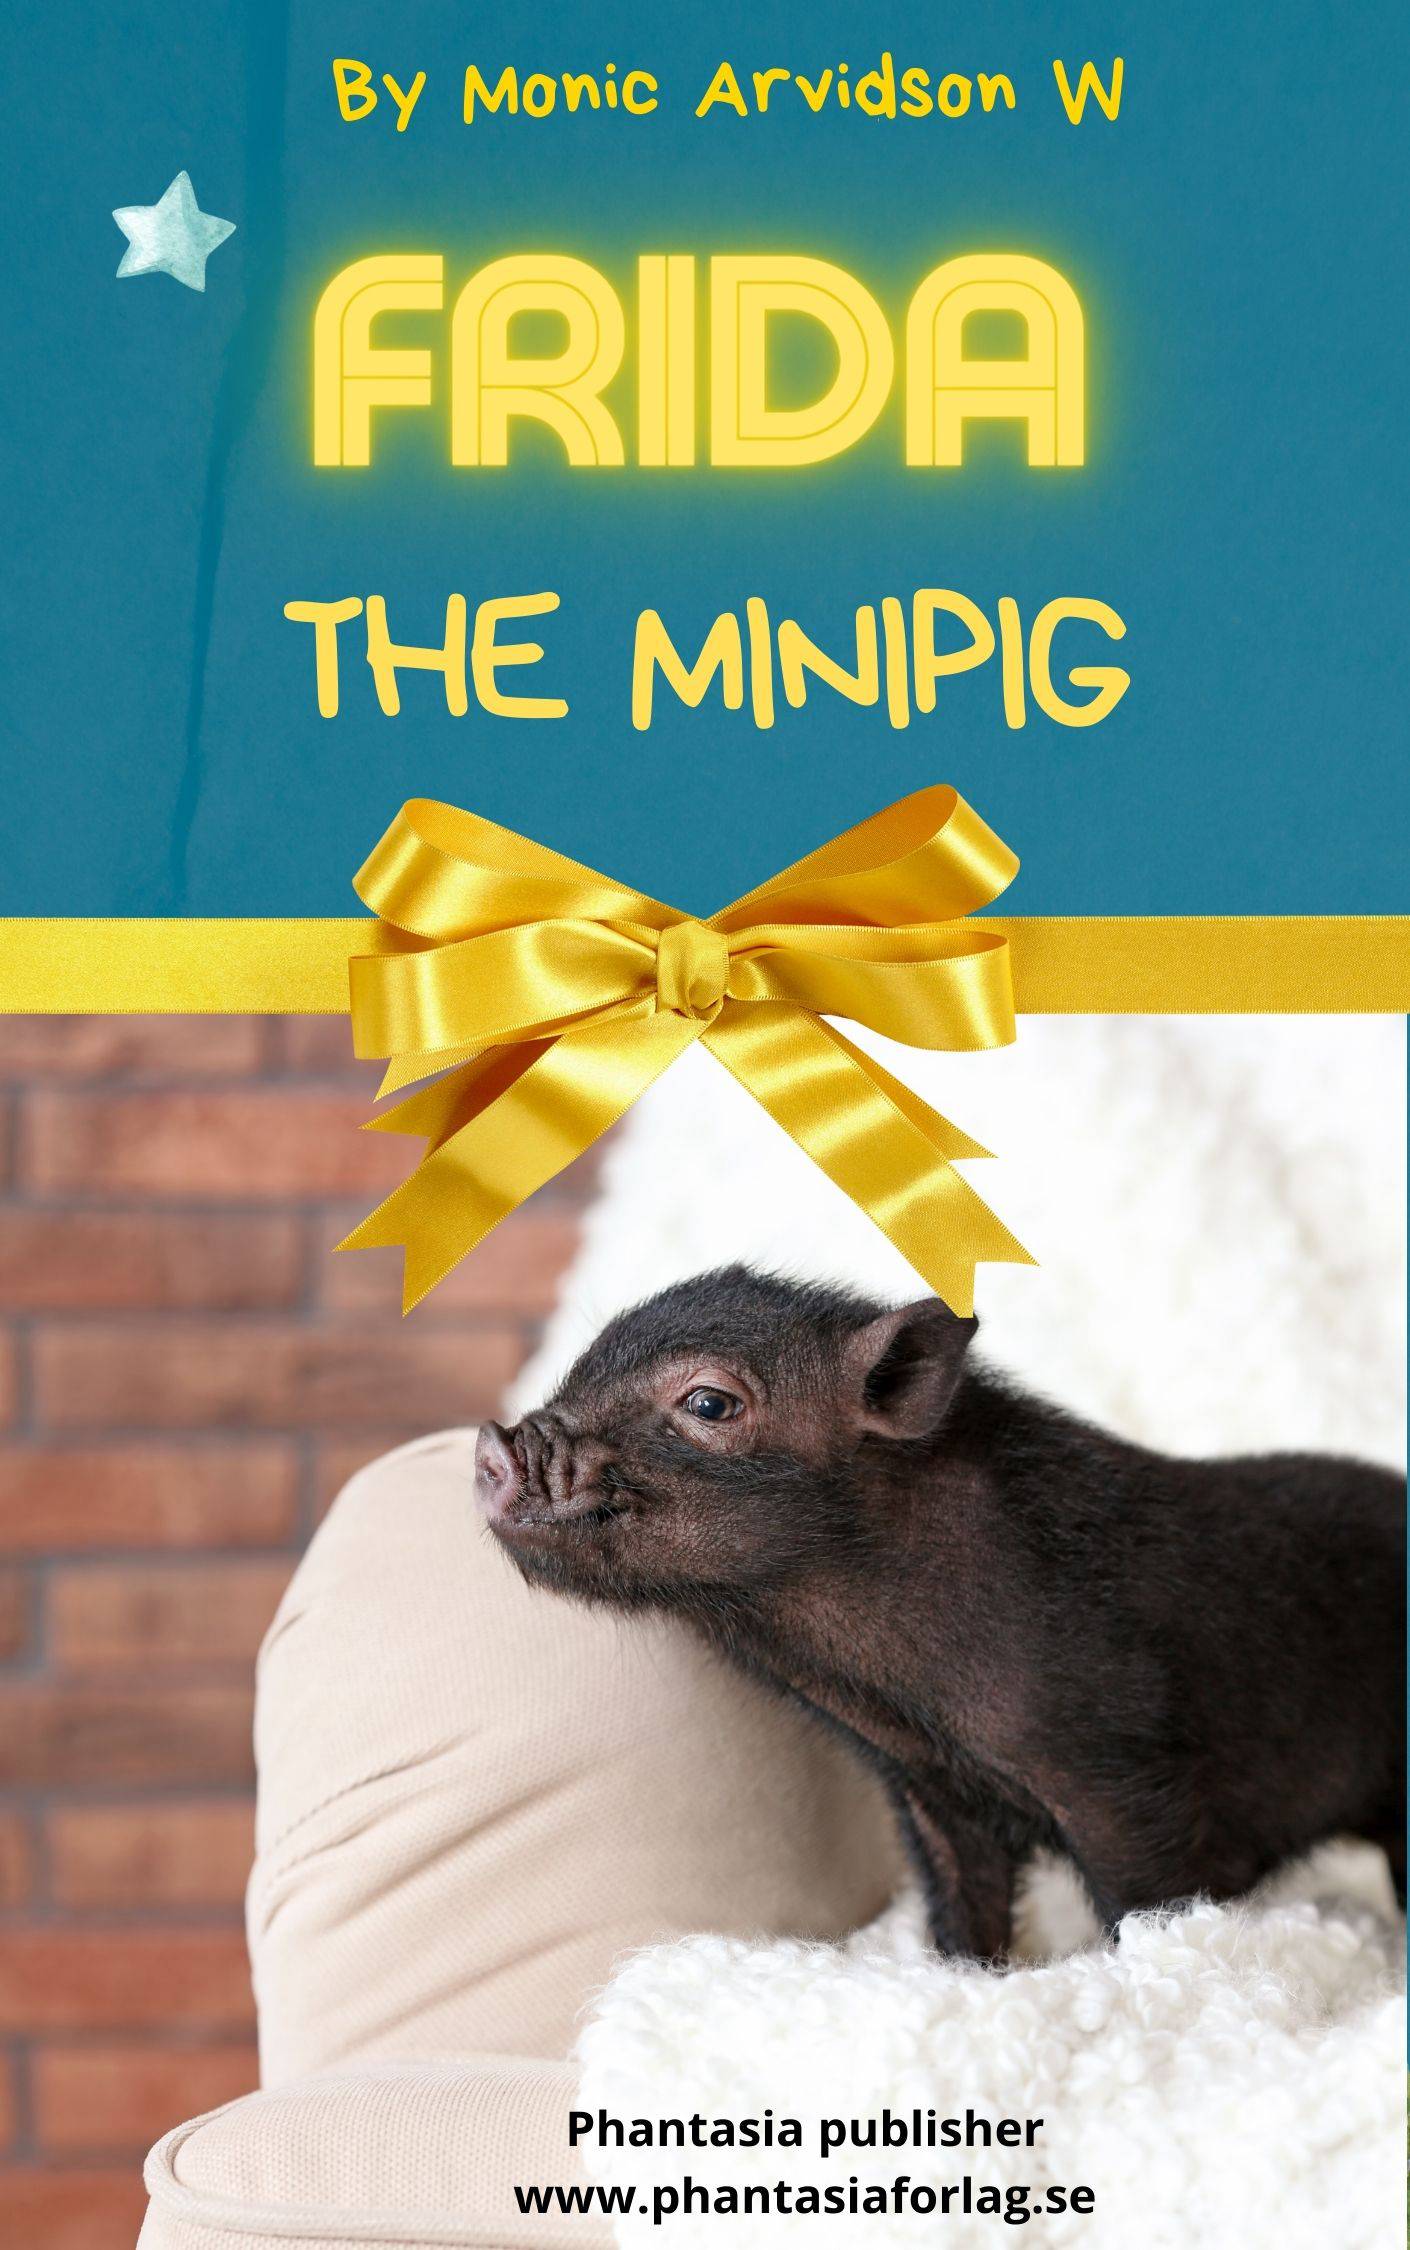 Frida, the mini pig